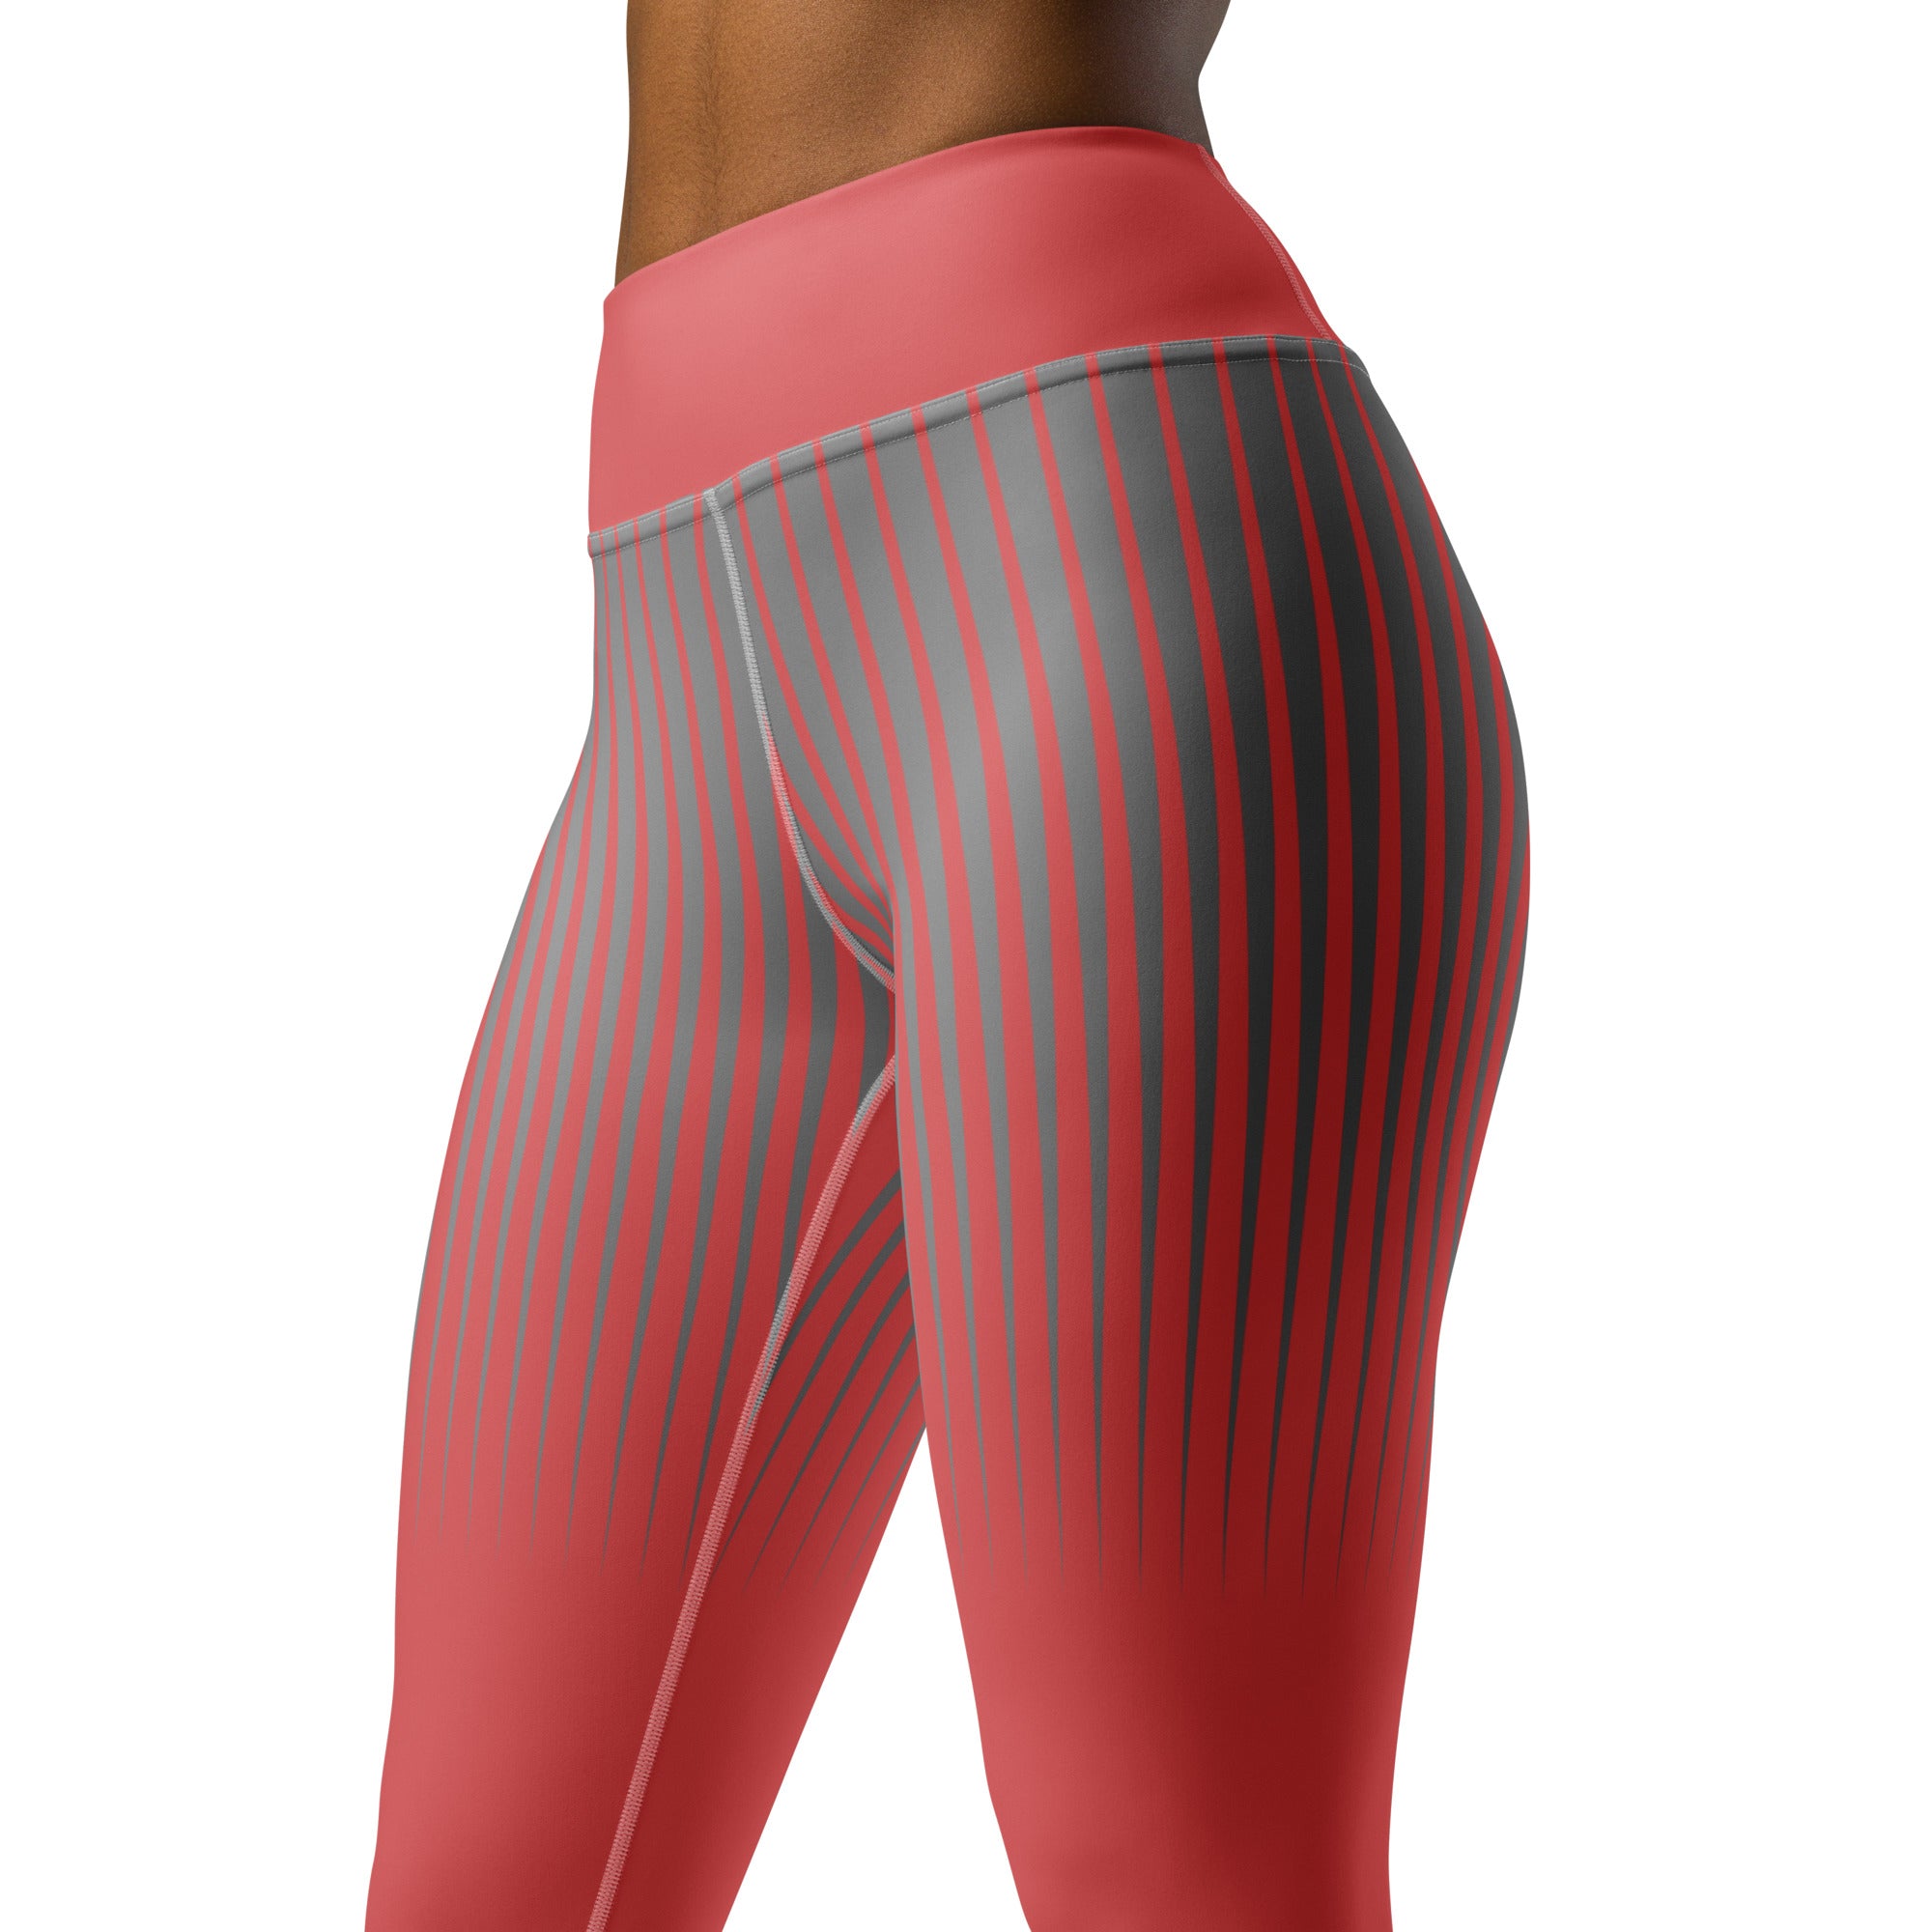 Close-up of Pearl Radiance Yoga Leggings fabric.